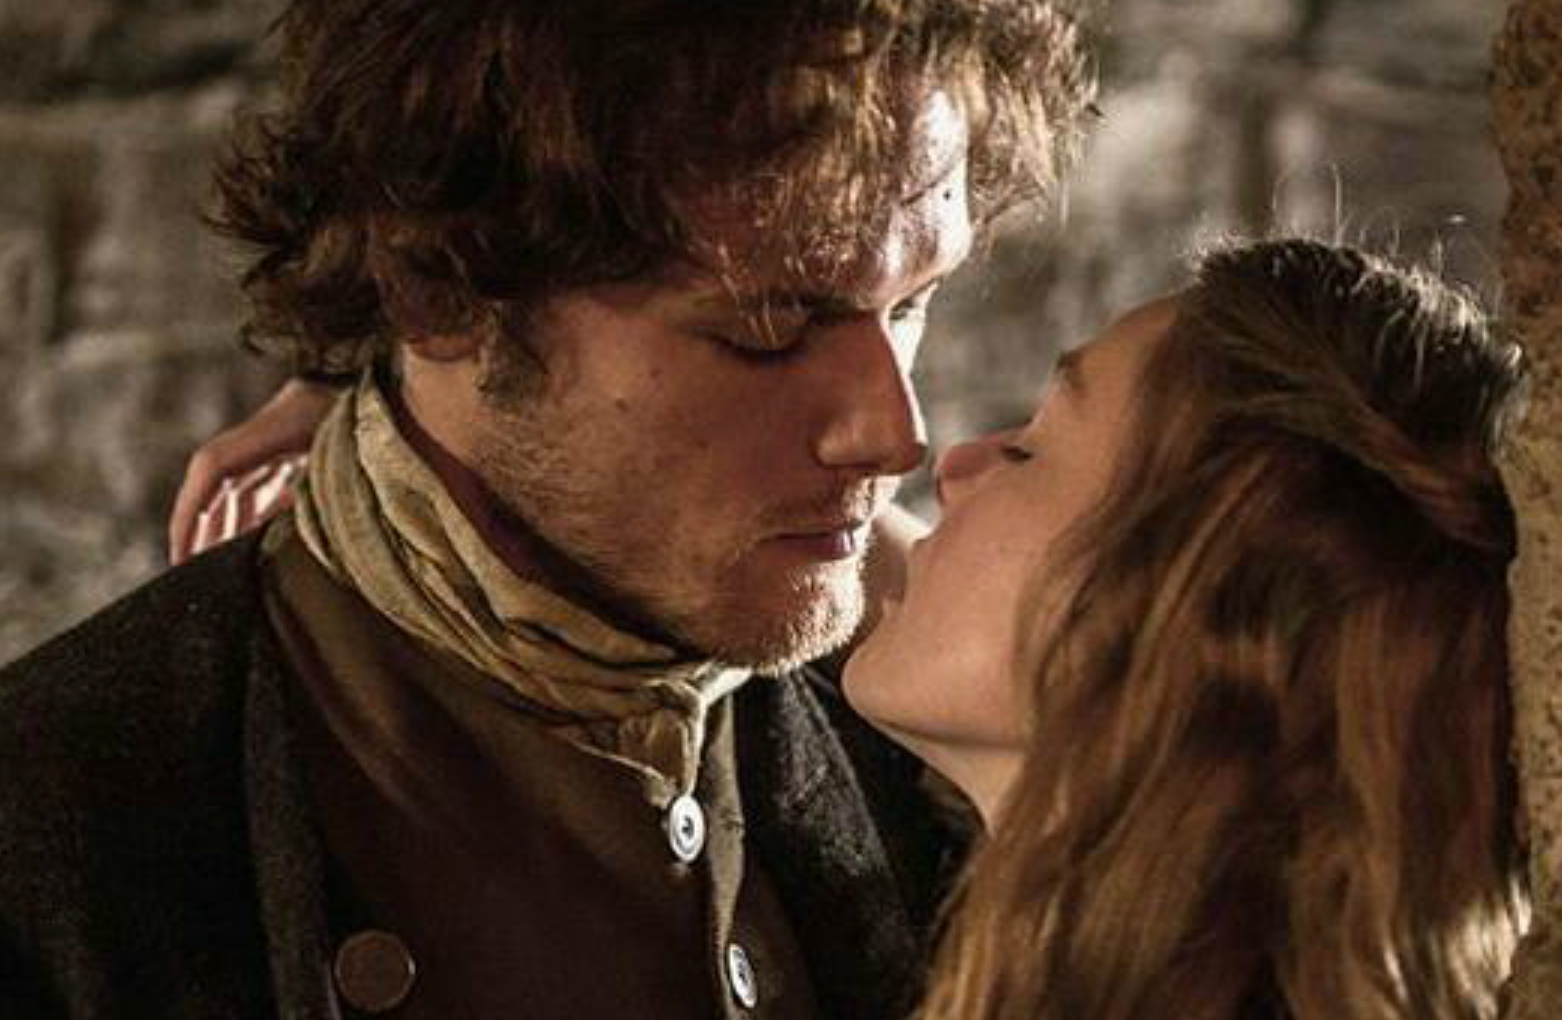 kissing in Outlander, kiss isn't just a kiss